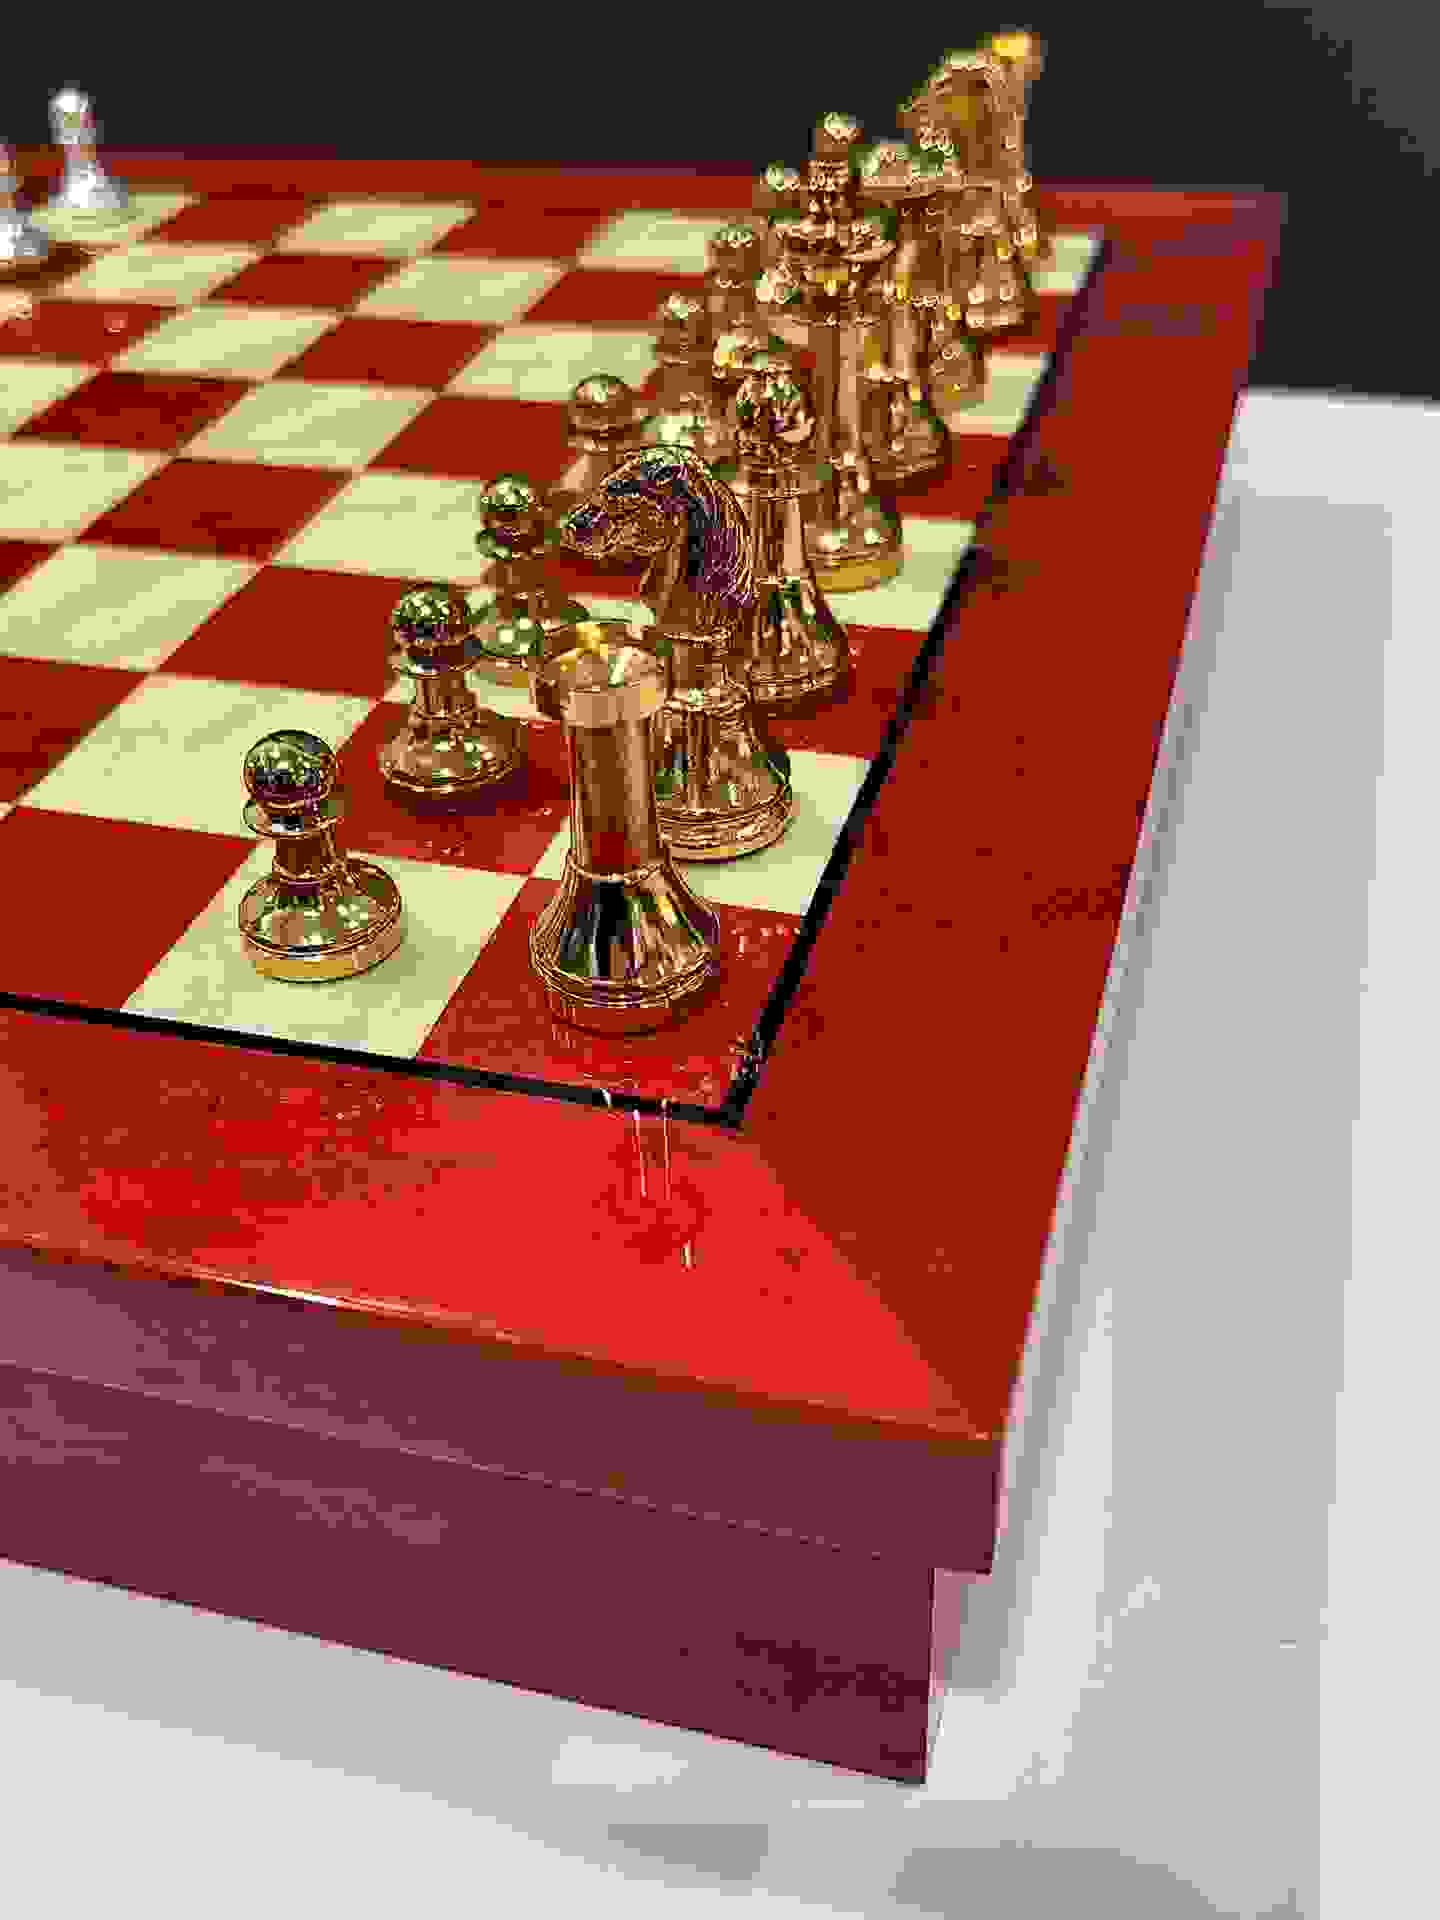 Italfama Chess Set Red/Off White Briar Wood 9538R + 96GS